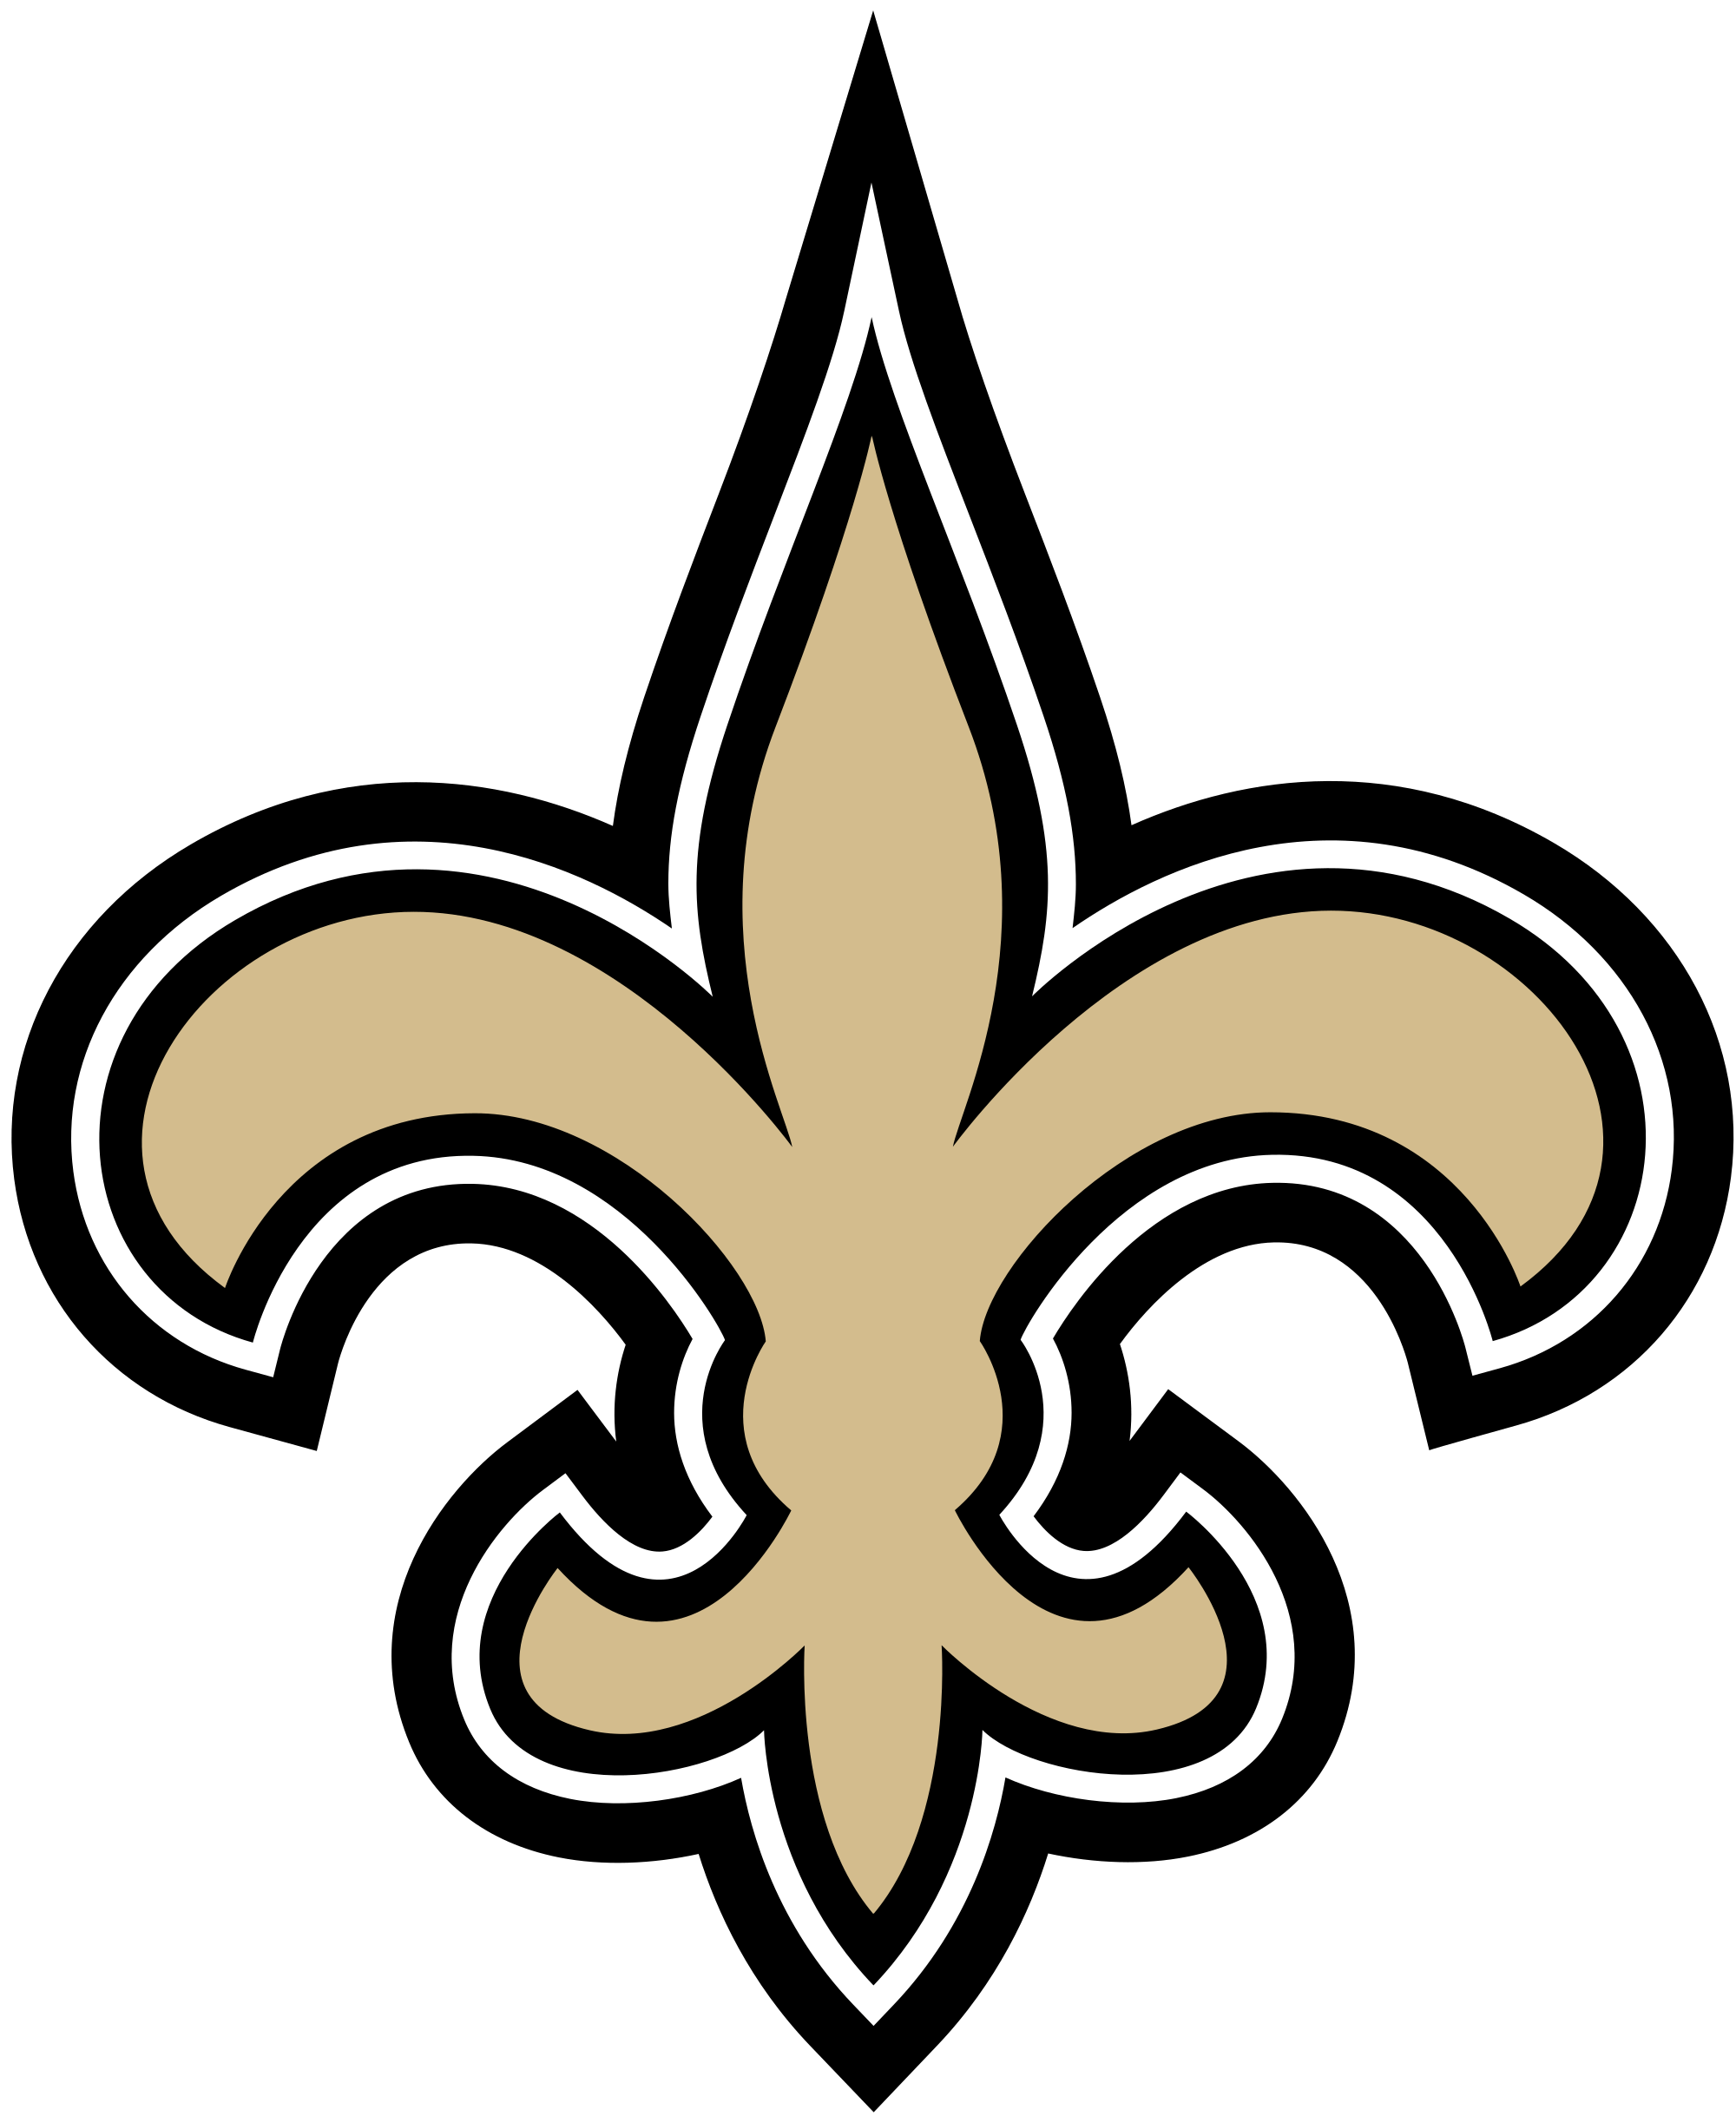 New Orleans Saints Logo - File:New Orleans Saints logo.svg - Wikimedia Commons